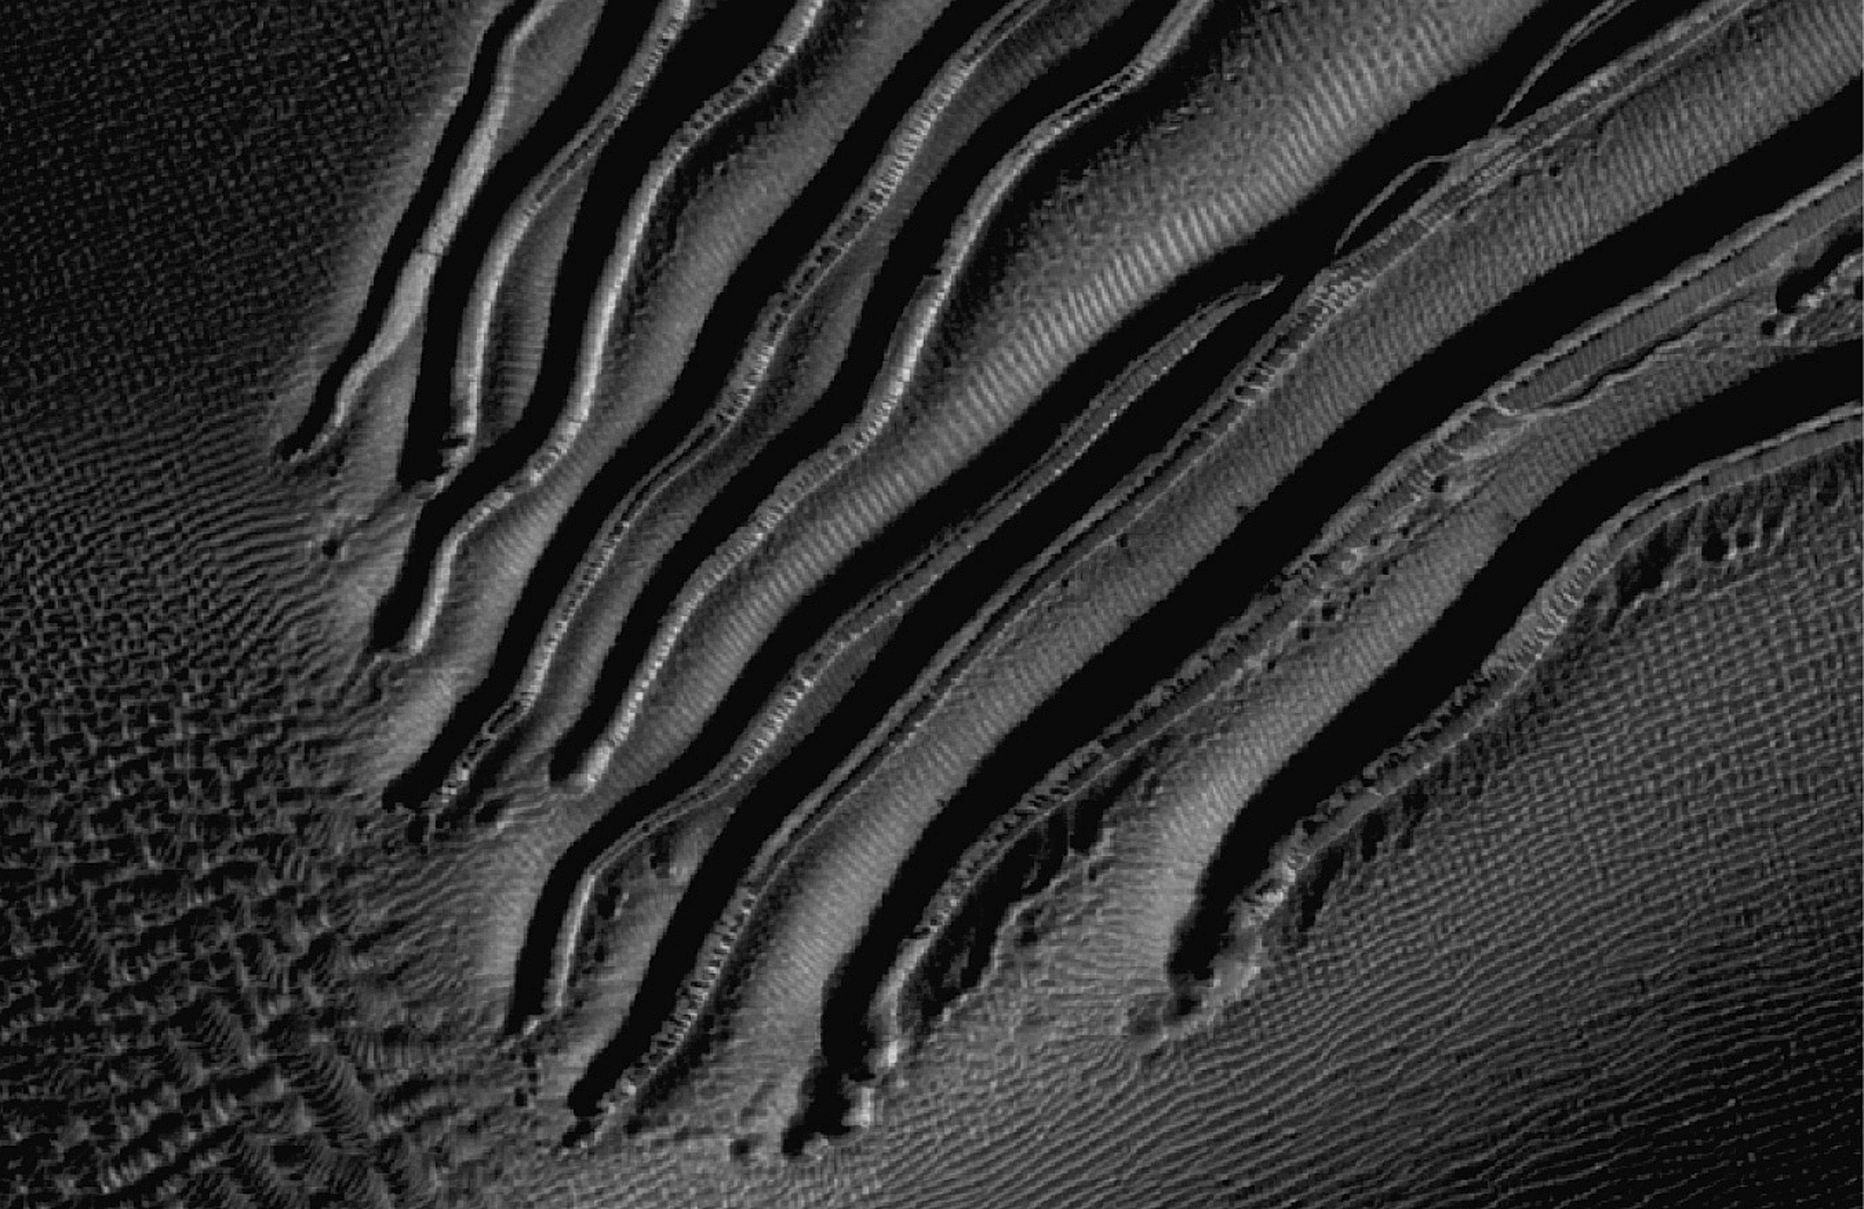 Marsilt leiti kuiva jääd